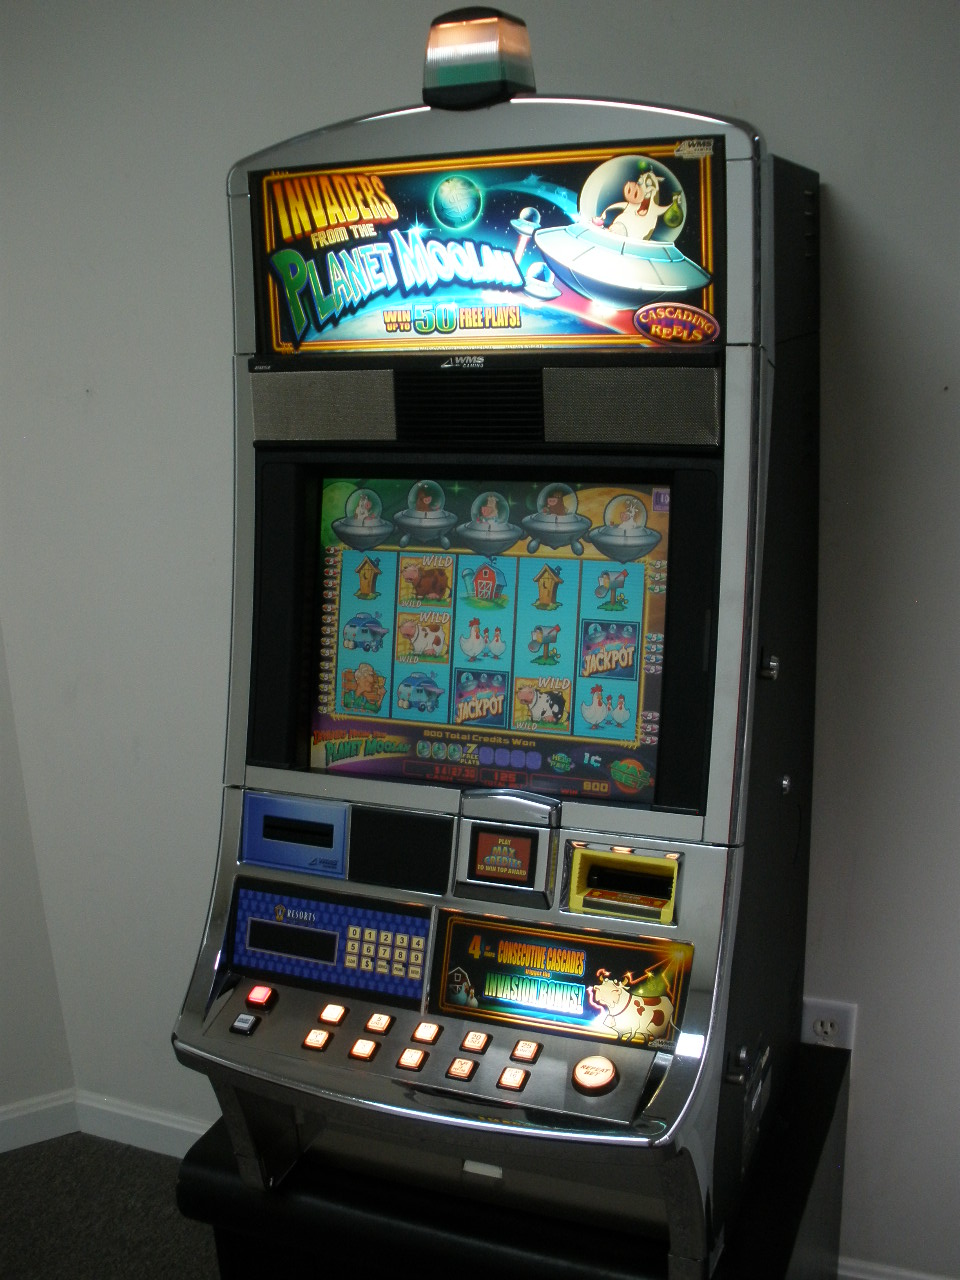 Planet Moolah Slot Machine For Sale